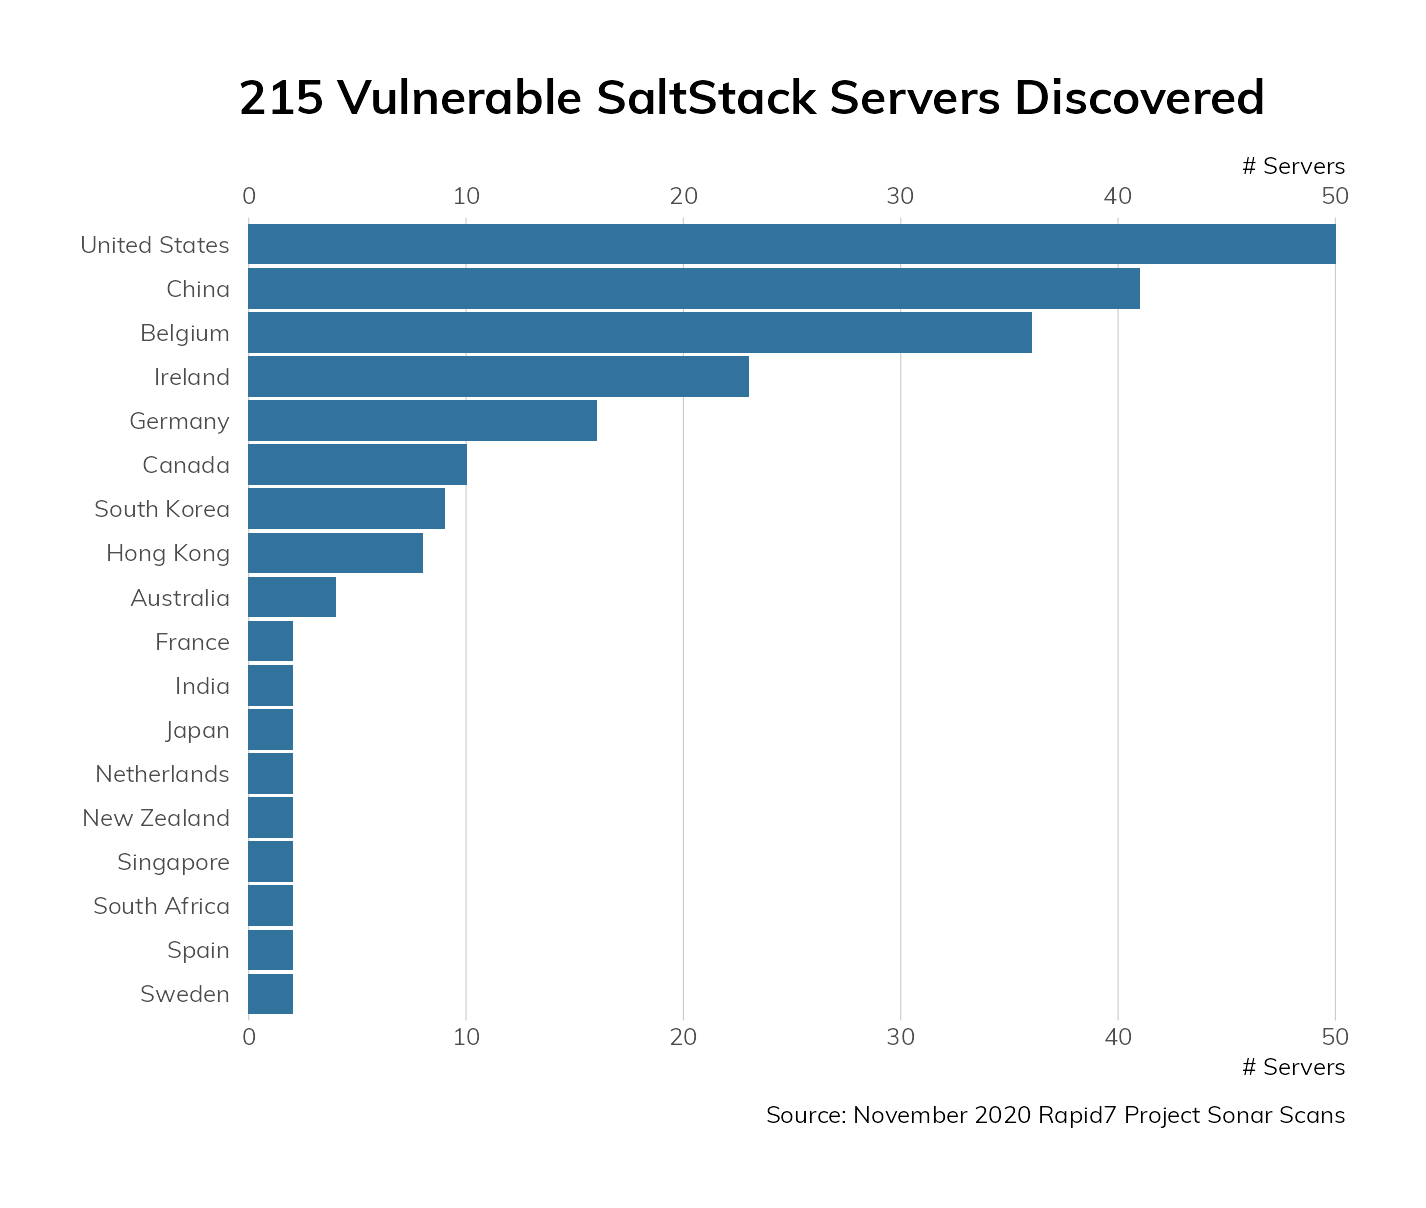 Rapid7 labs discovered 215 vulnerable SaltStack servers in November 2020.